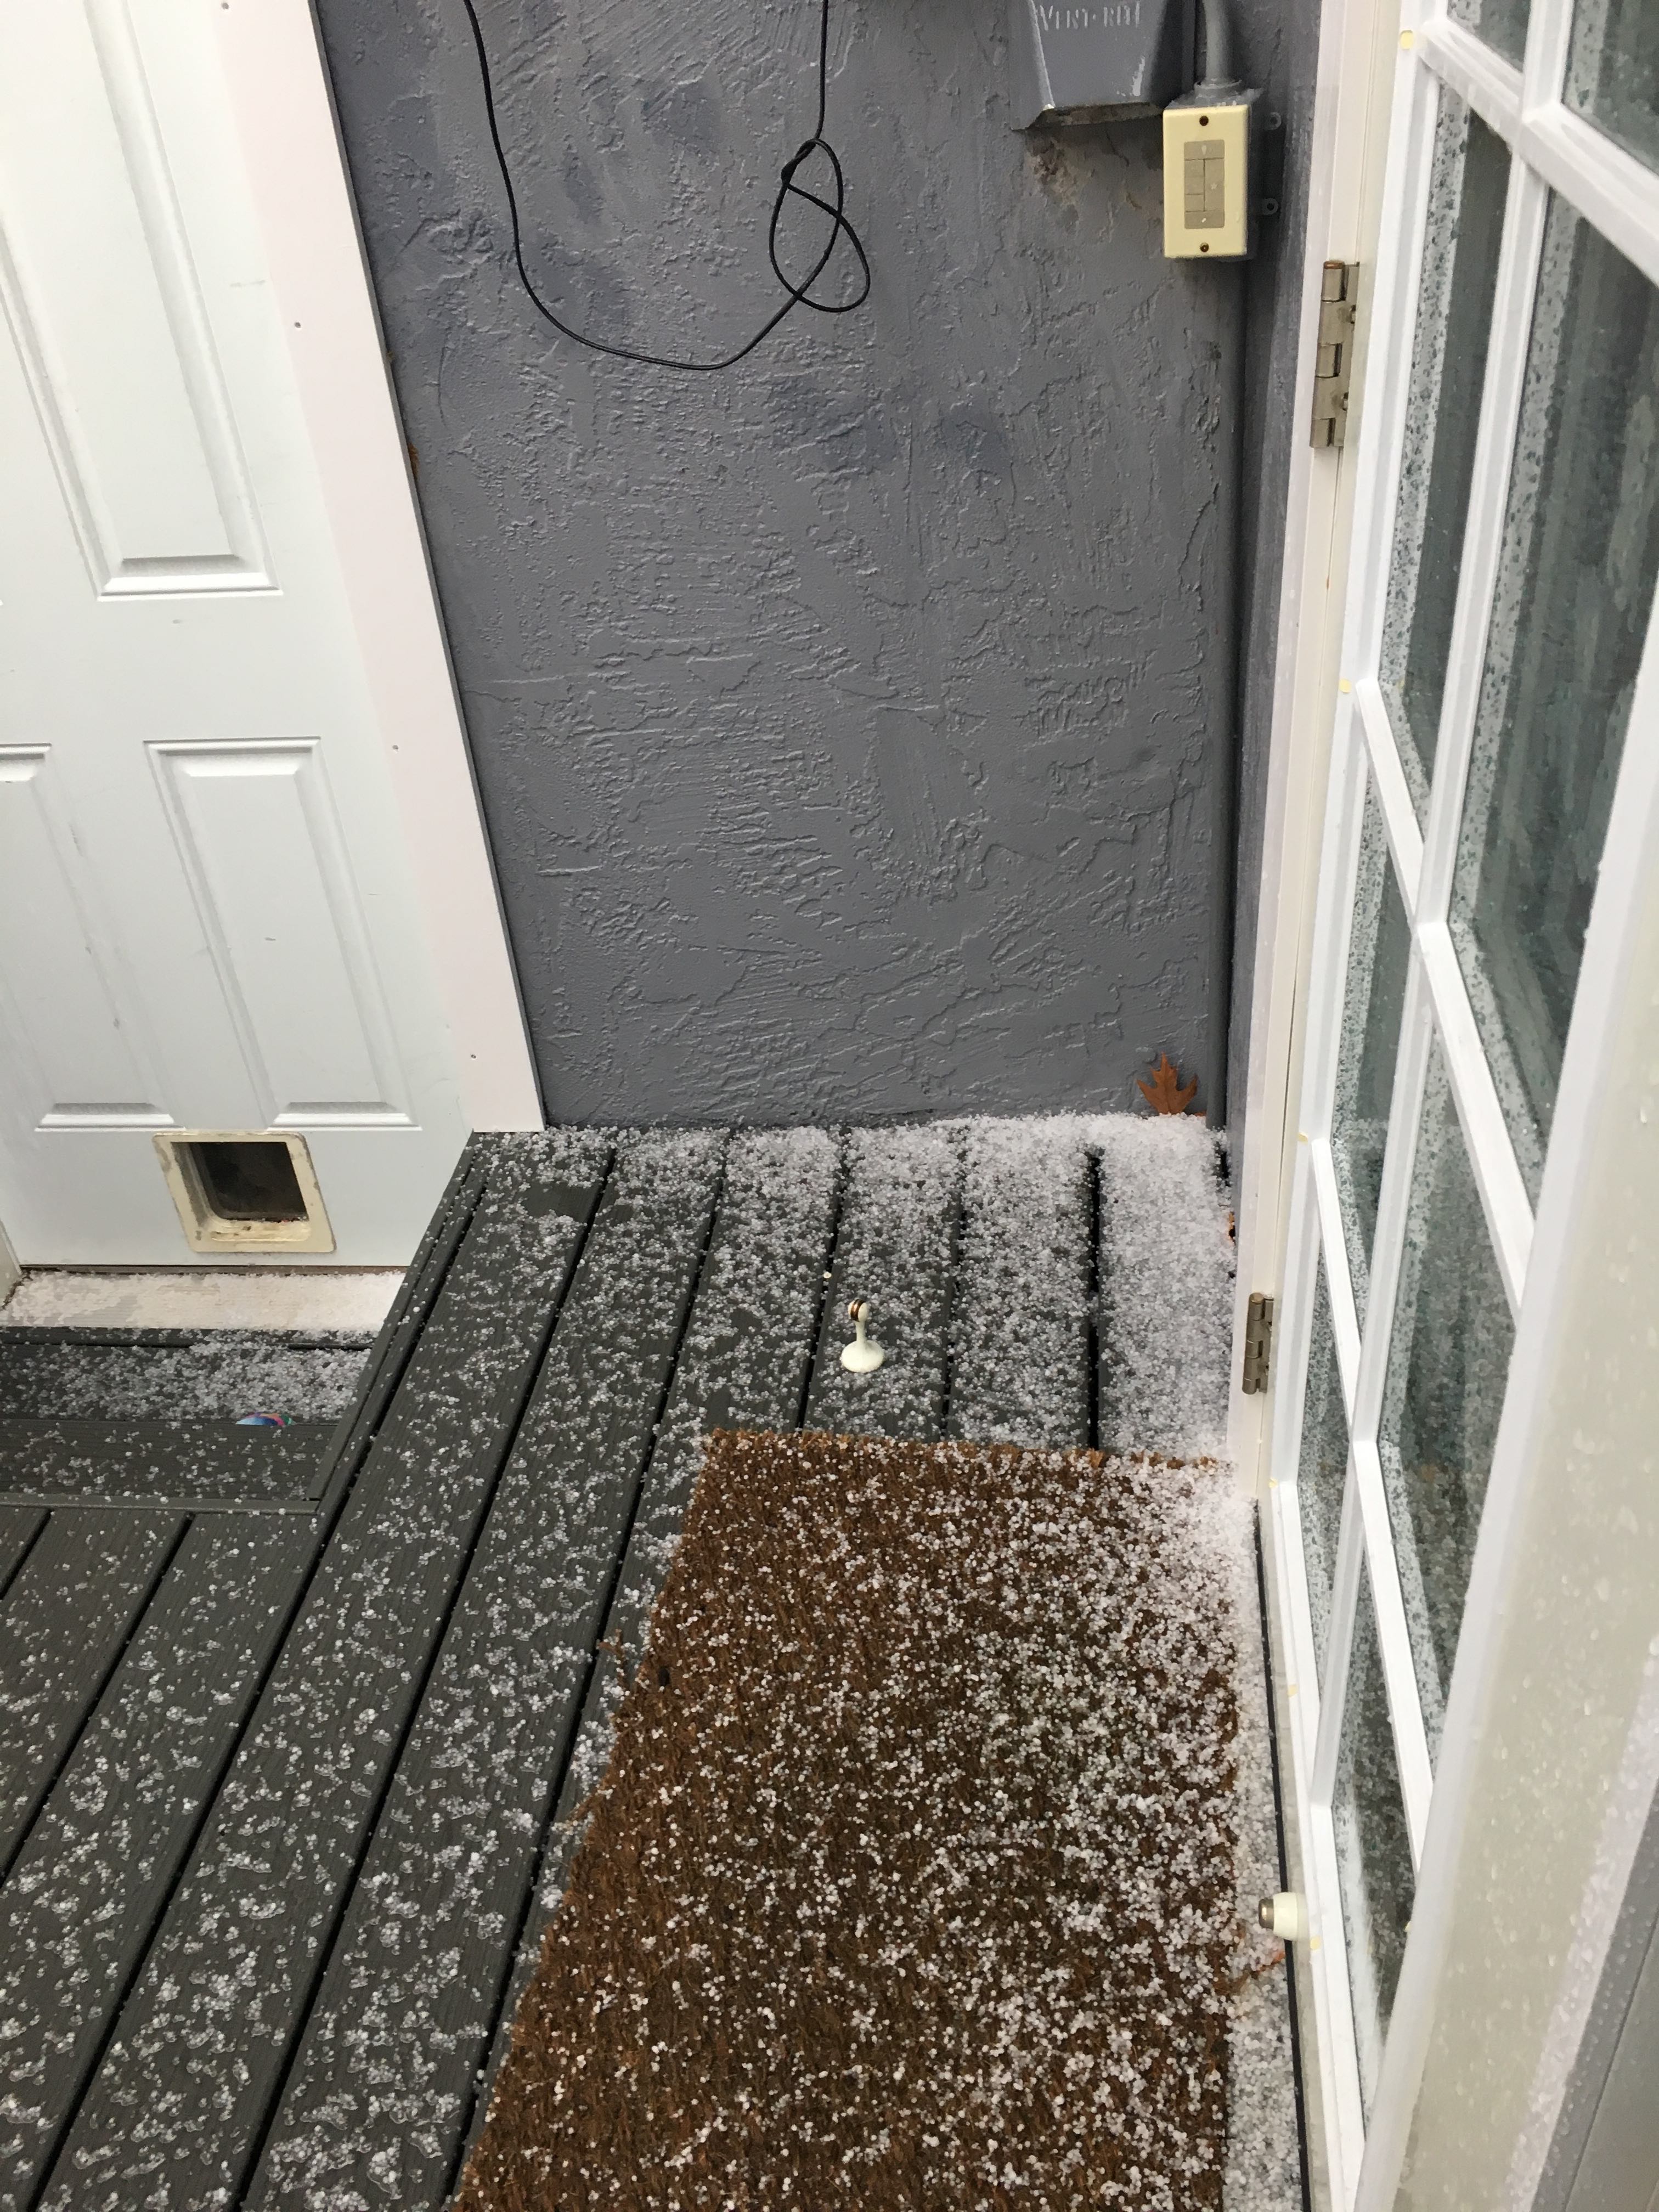 Hail accumulating at doorstep